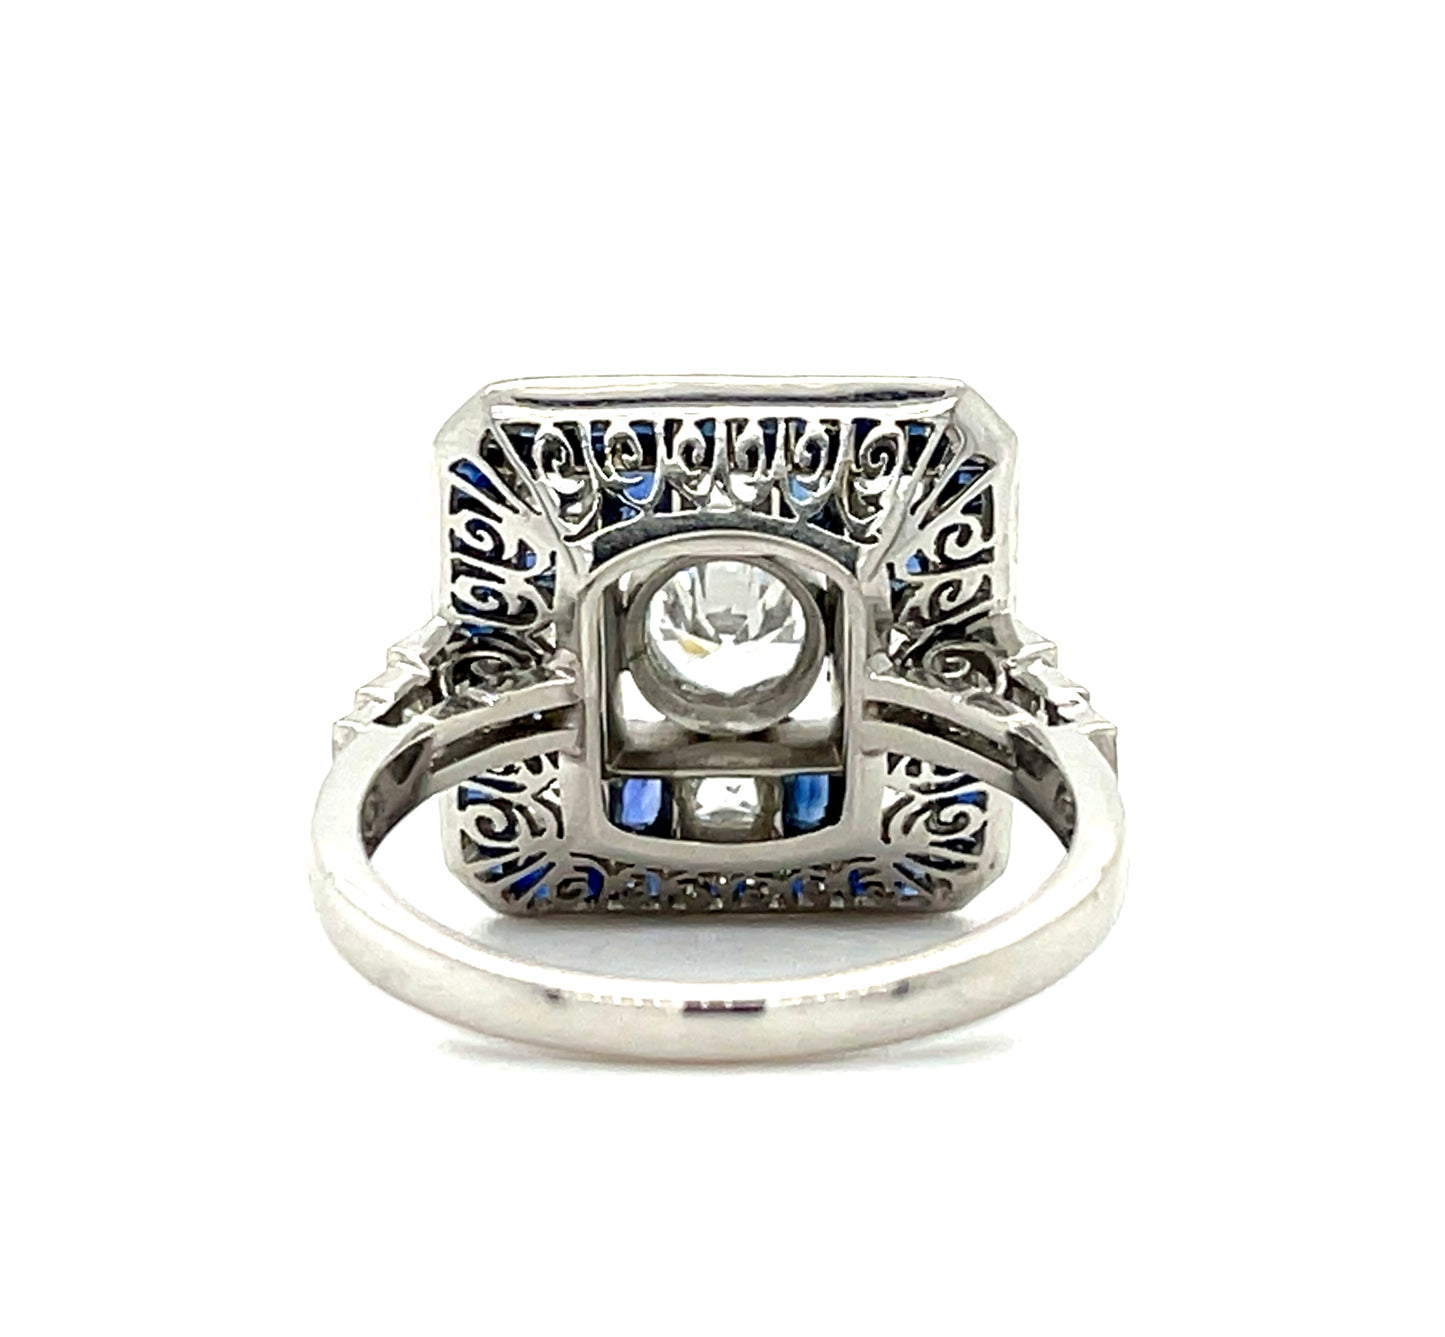 .42ct Center Diamond Handmade & Inspired Platinum Ring 2.28ct French cut Sapphires 1ct Antique French Cut Diamonds